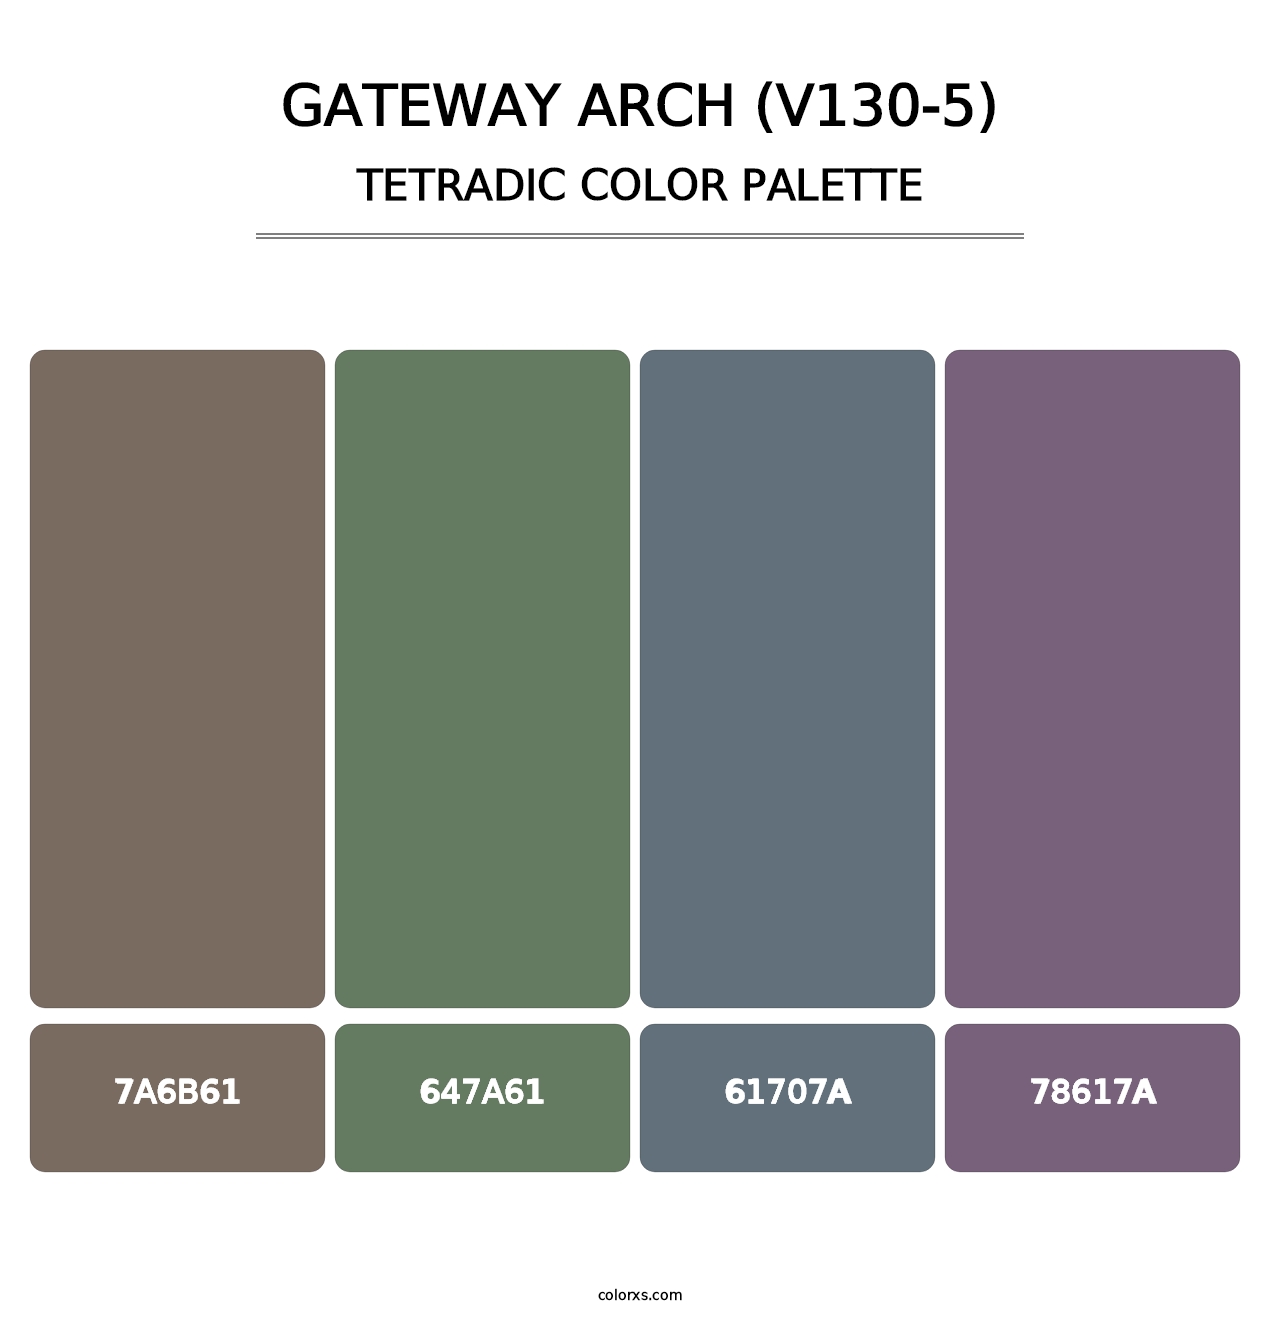 Gateway Arch (V130-5) - Tetradic Color Palette